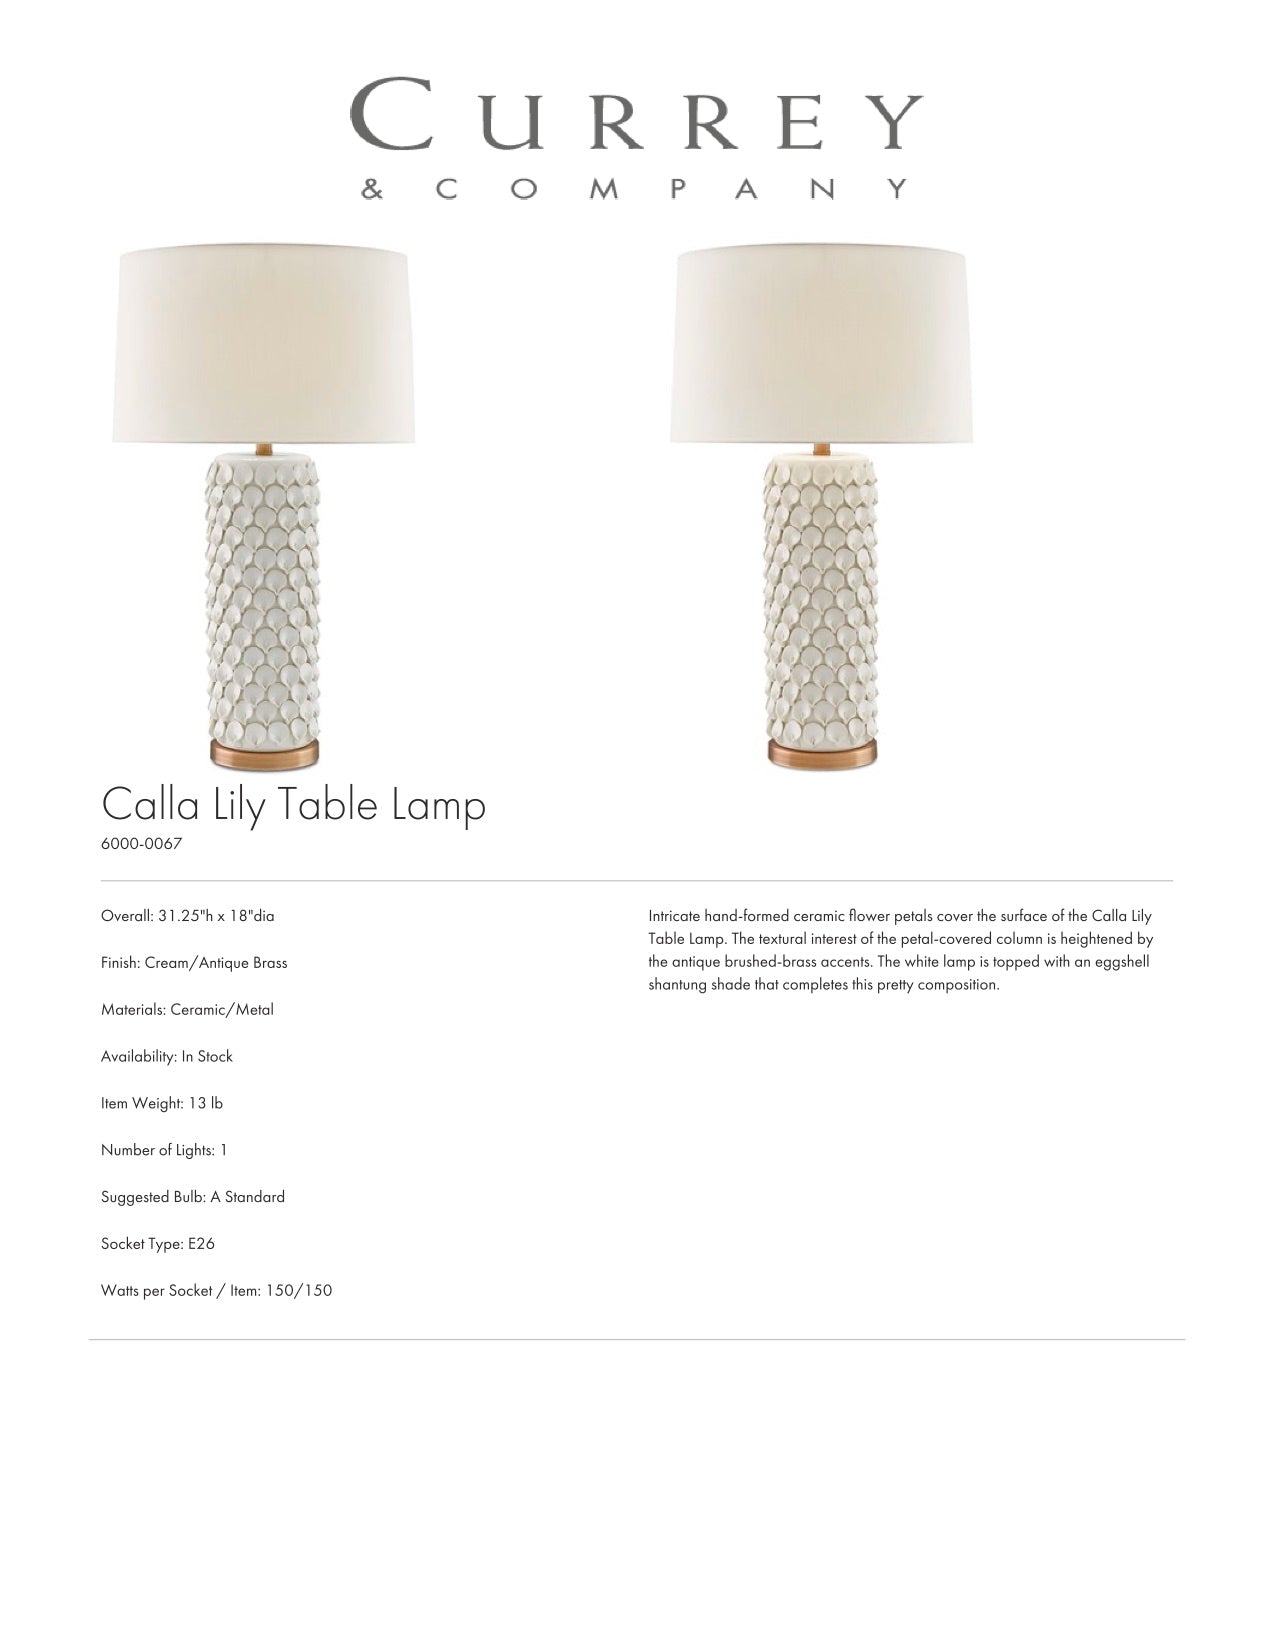 Currey & Company Calla Lily Table Lamp Tearsheet